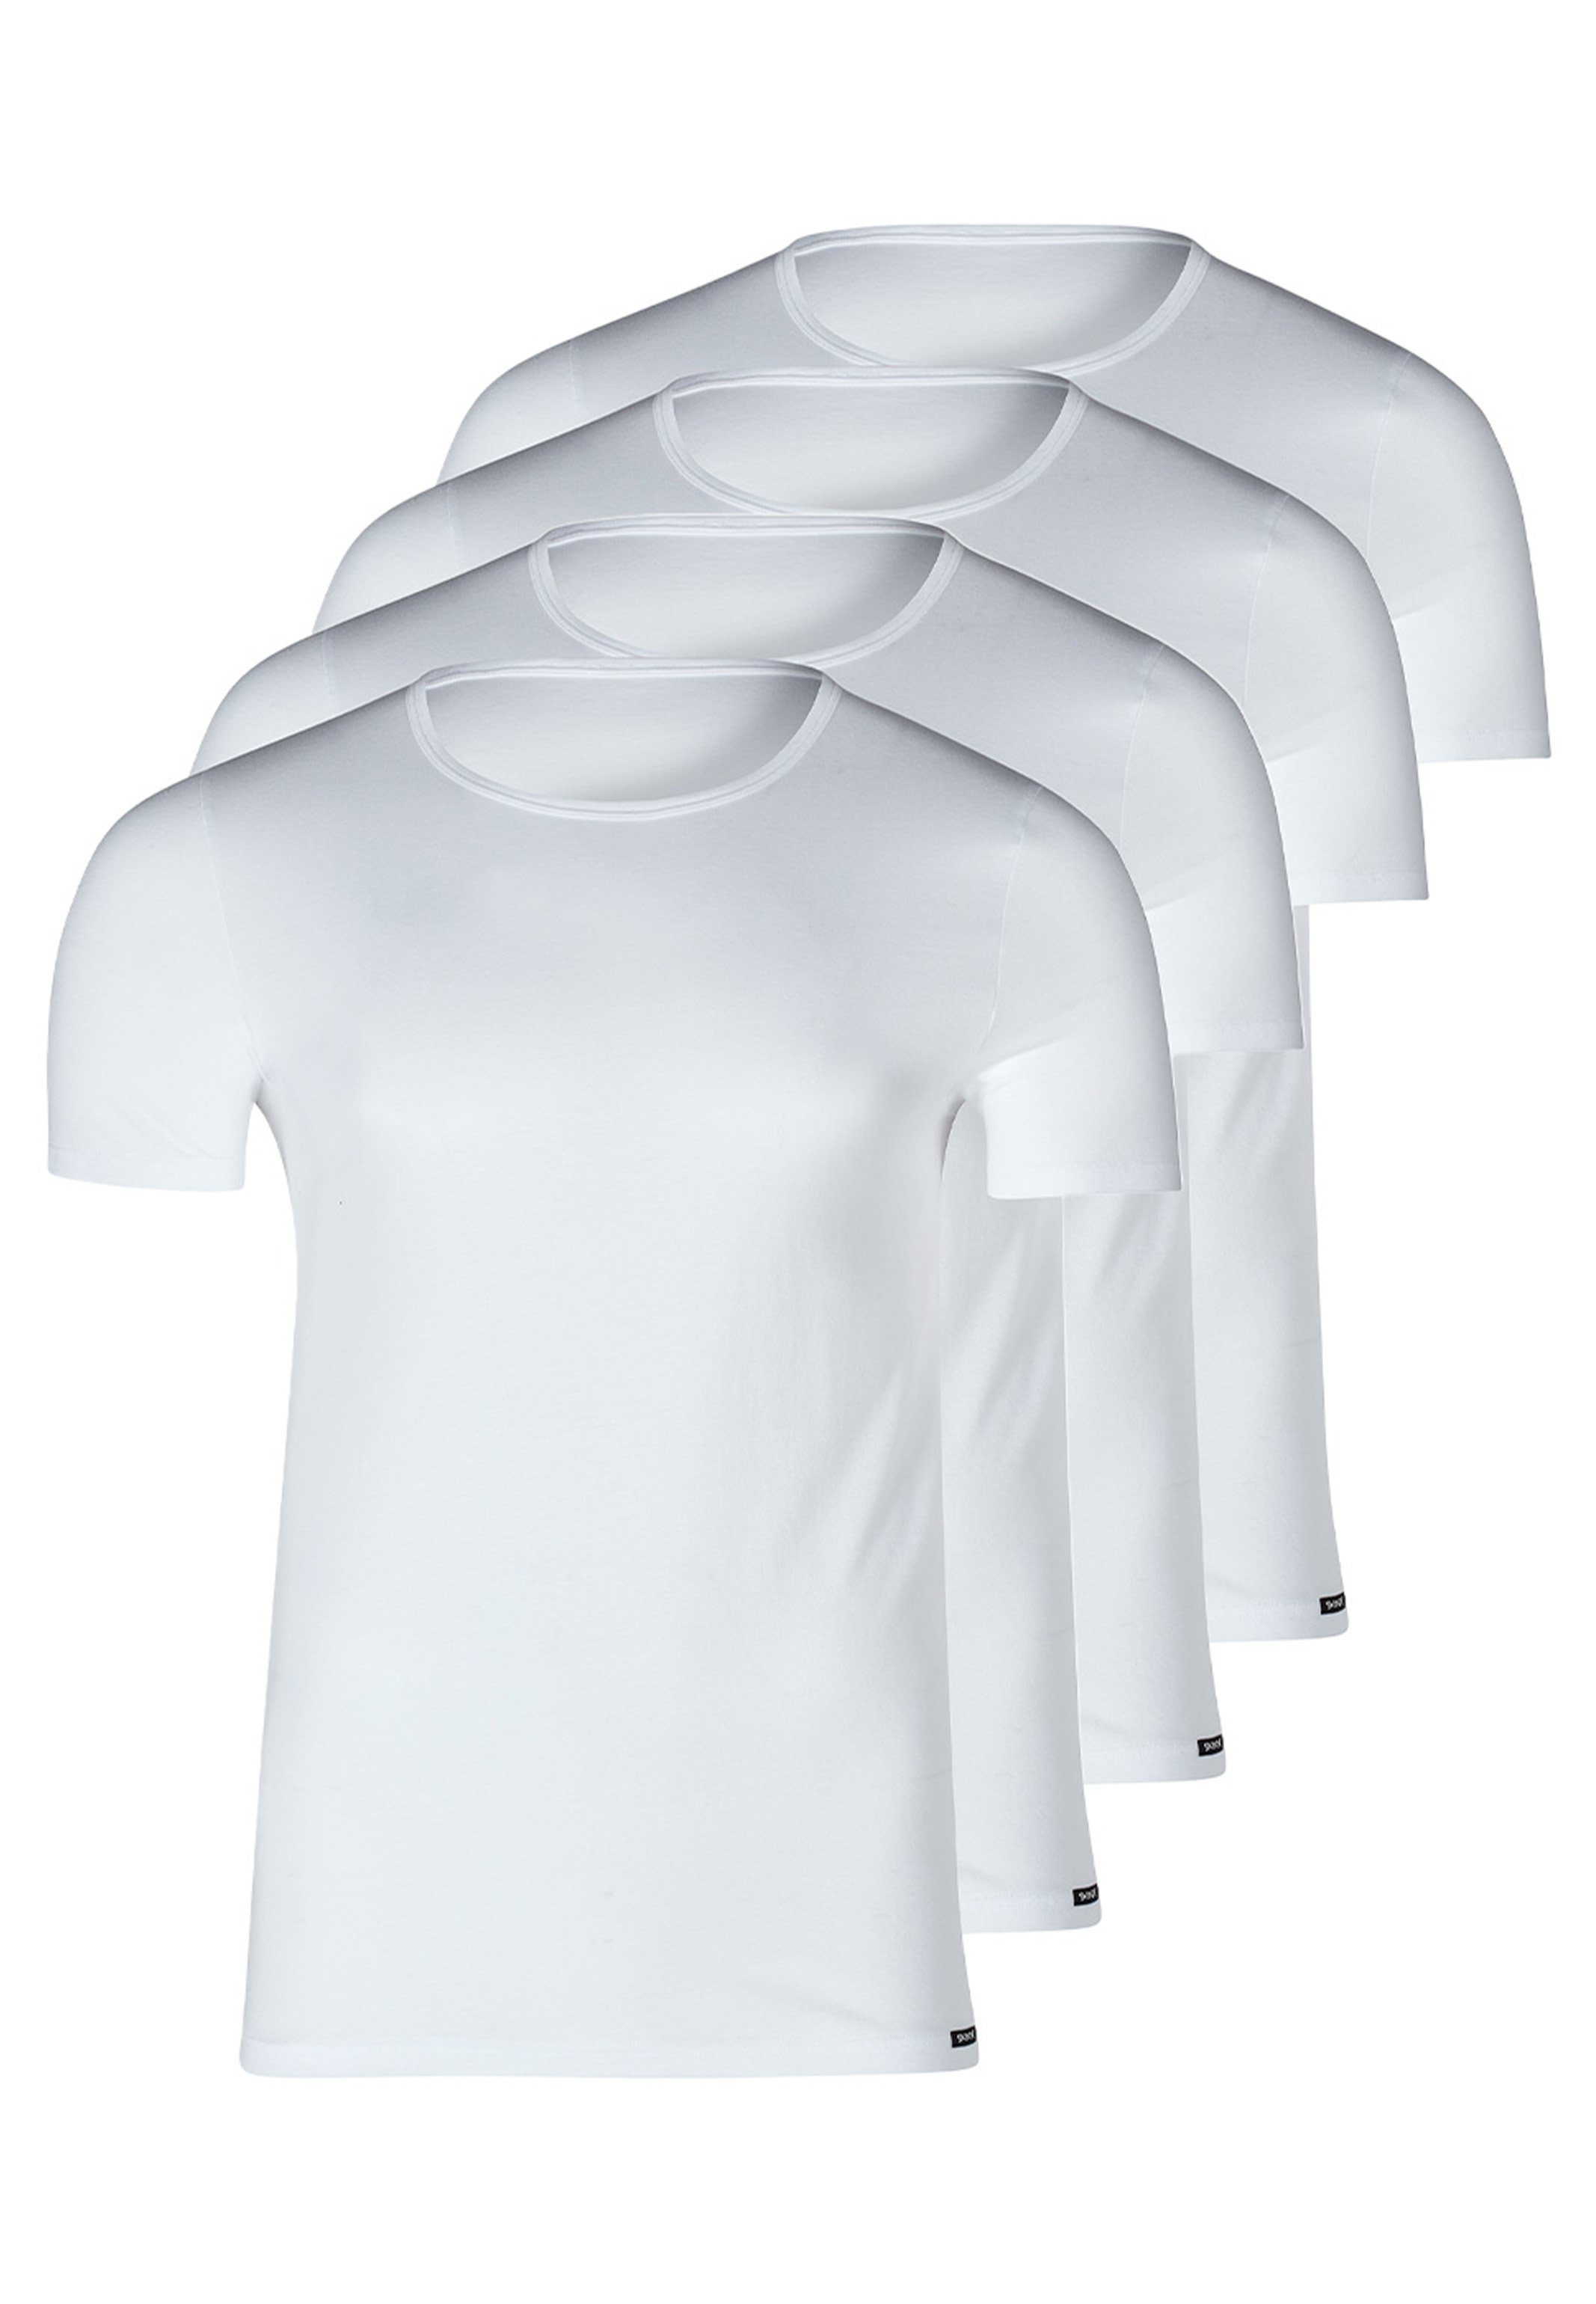 Skiny Unterhemd 4er Pack Unterhemd / Shirt Kurzarm (Spar-Set, 4-St) Unterhemd / Shirt Kurzarm - Baumwolle - T-Shirt mit Rundhalsausschnitt Weiß | Unterhemden